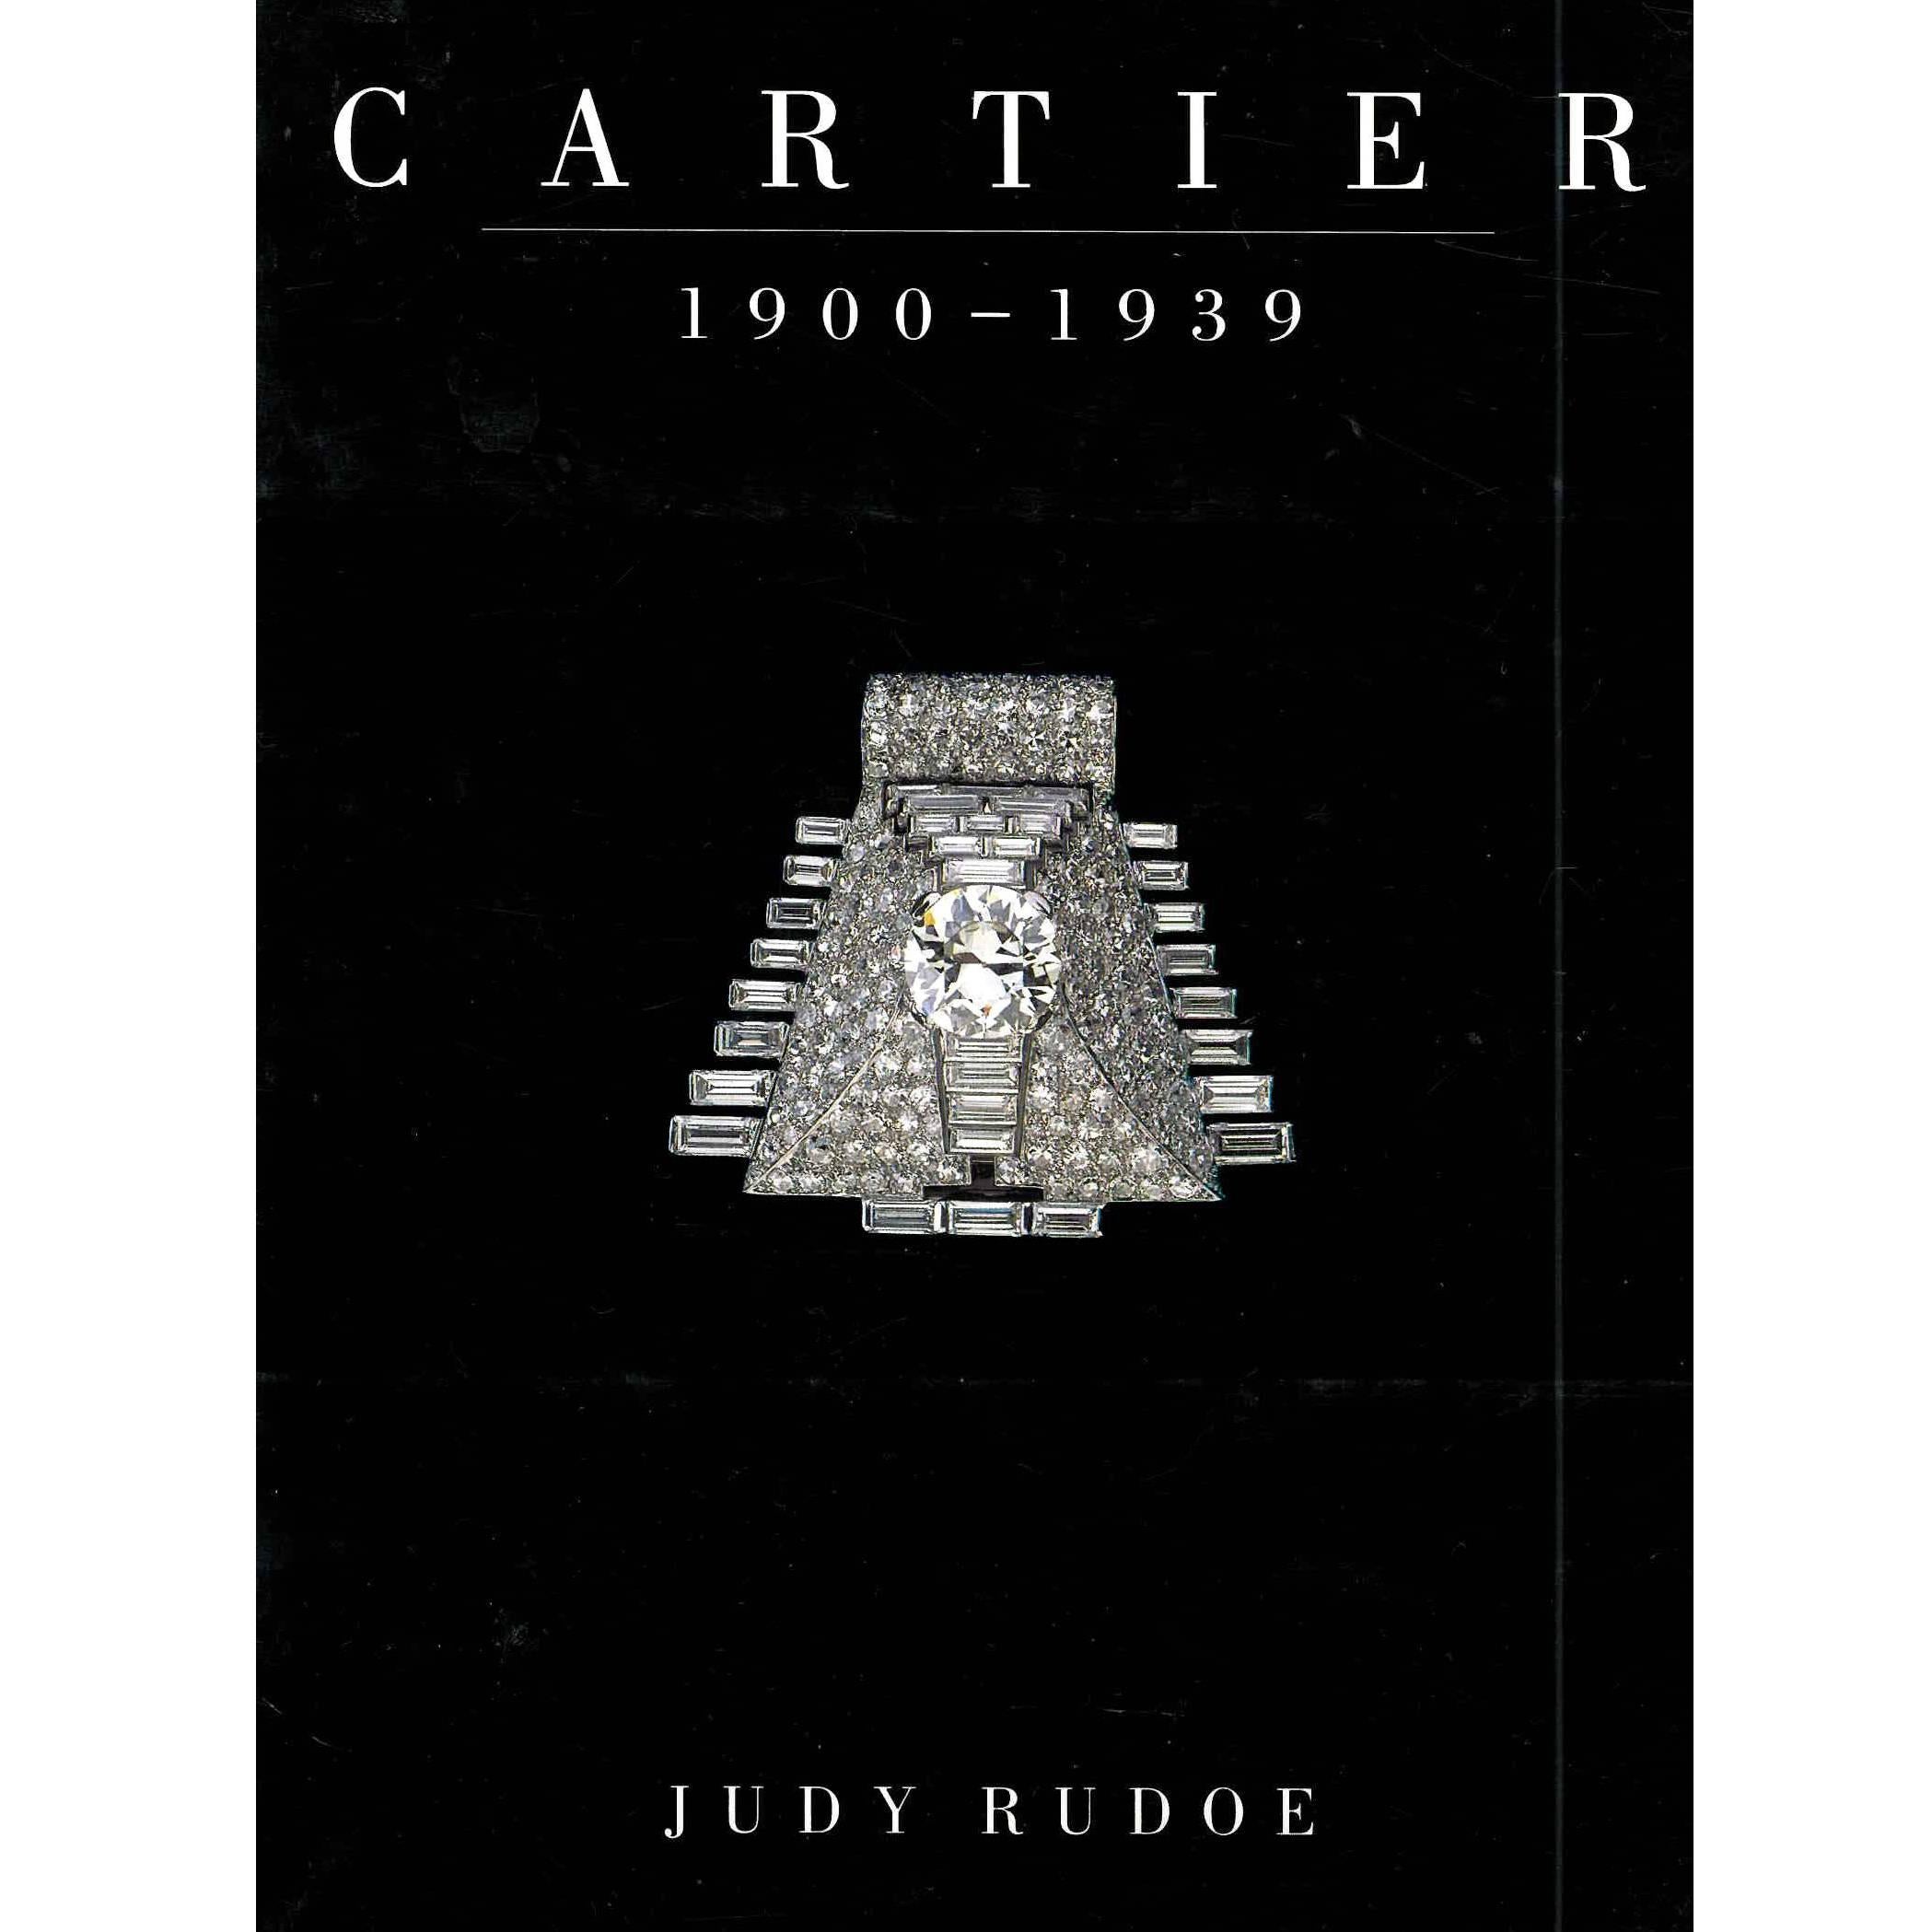 Book of Cartier 1900-1939.